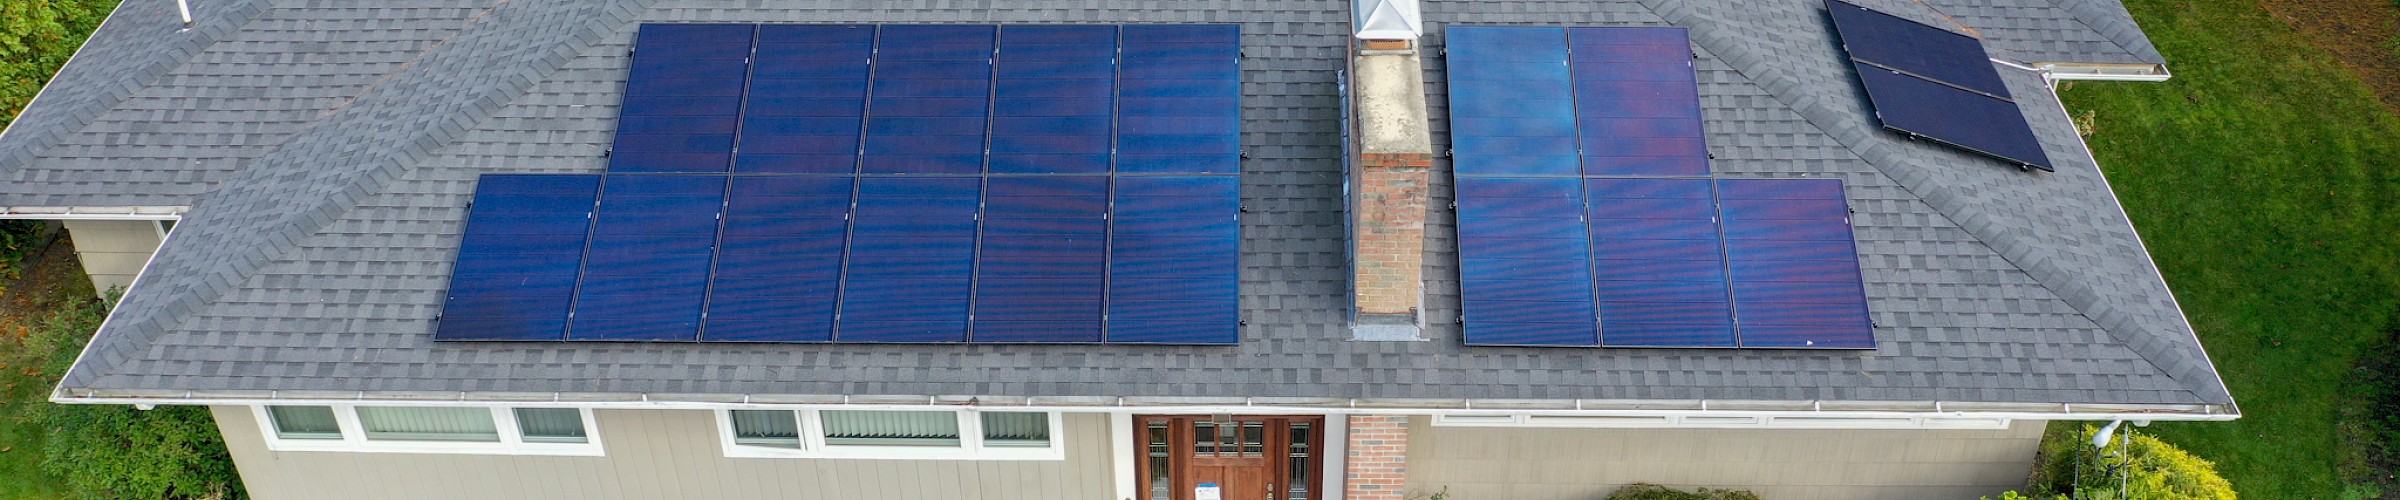 7.56kW Solar Installation - Needham MA